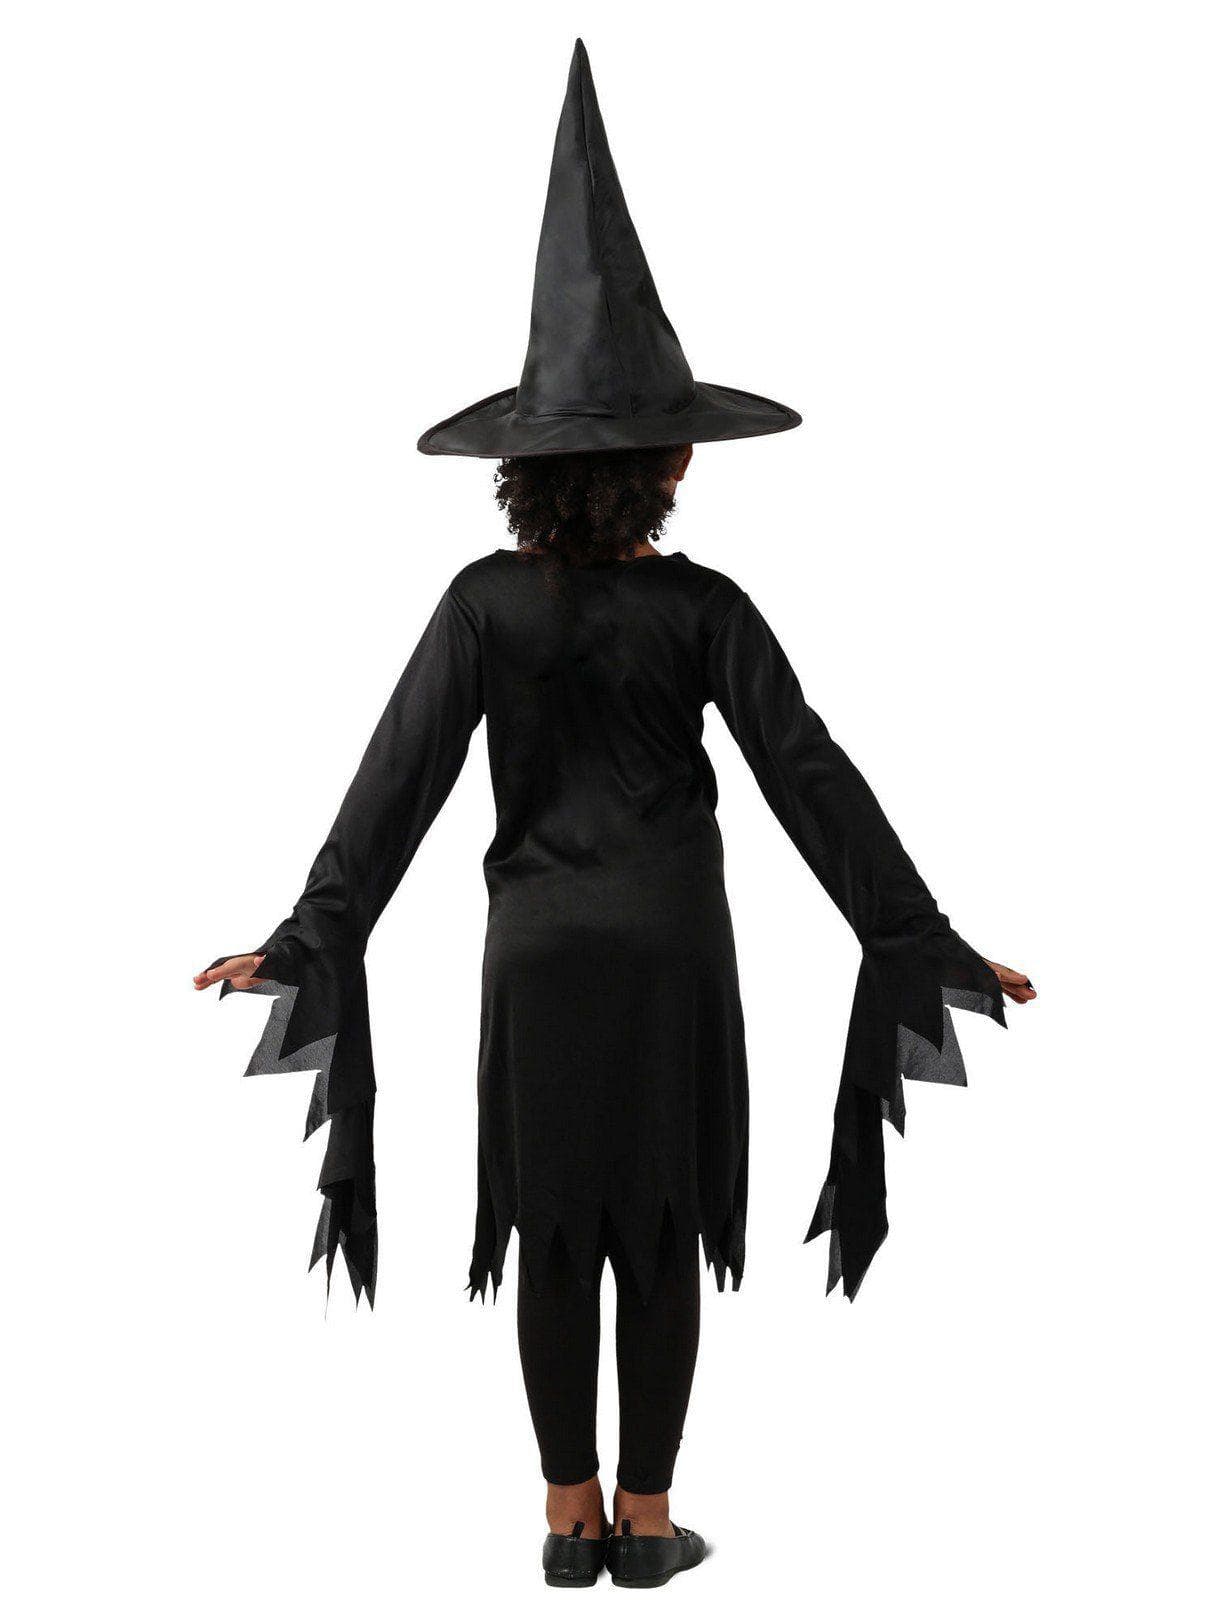 Kid's Wanda the Witch Costume - costumes.com